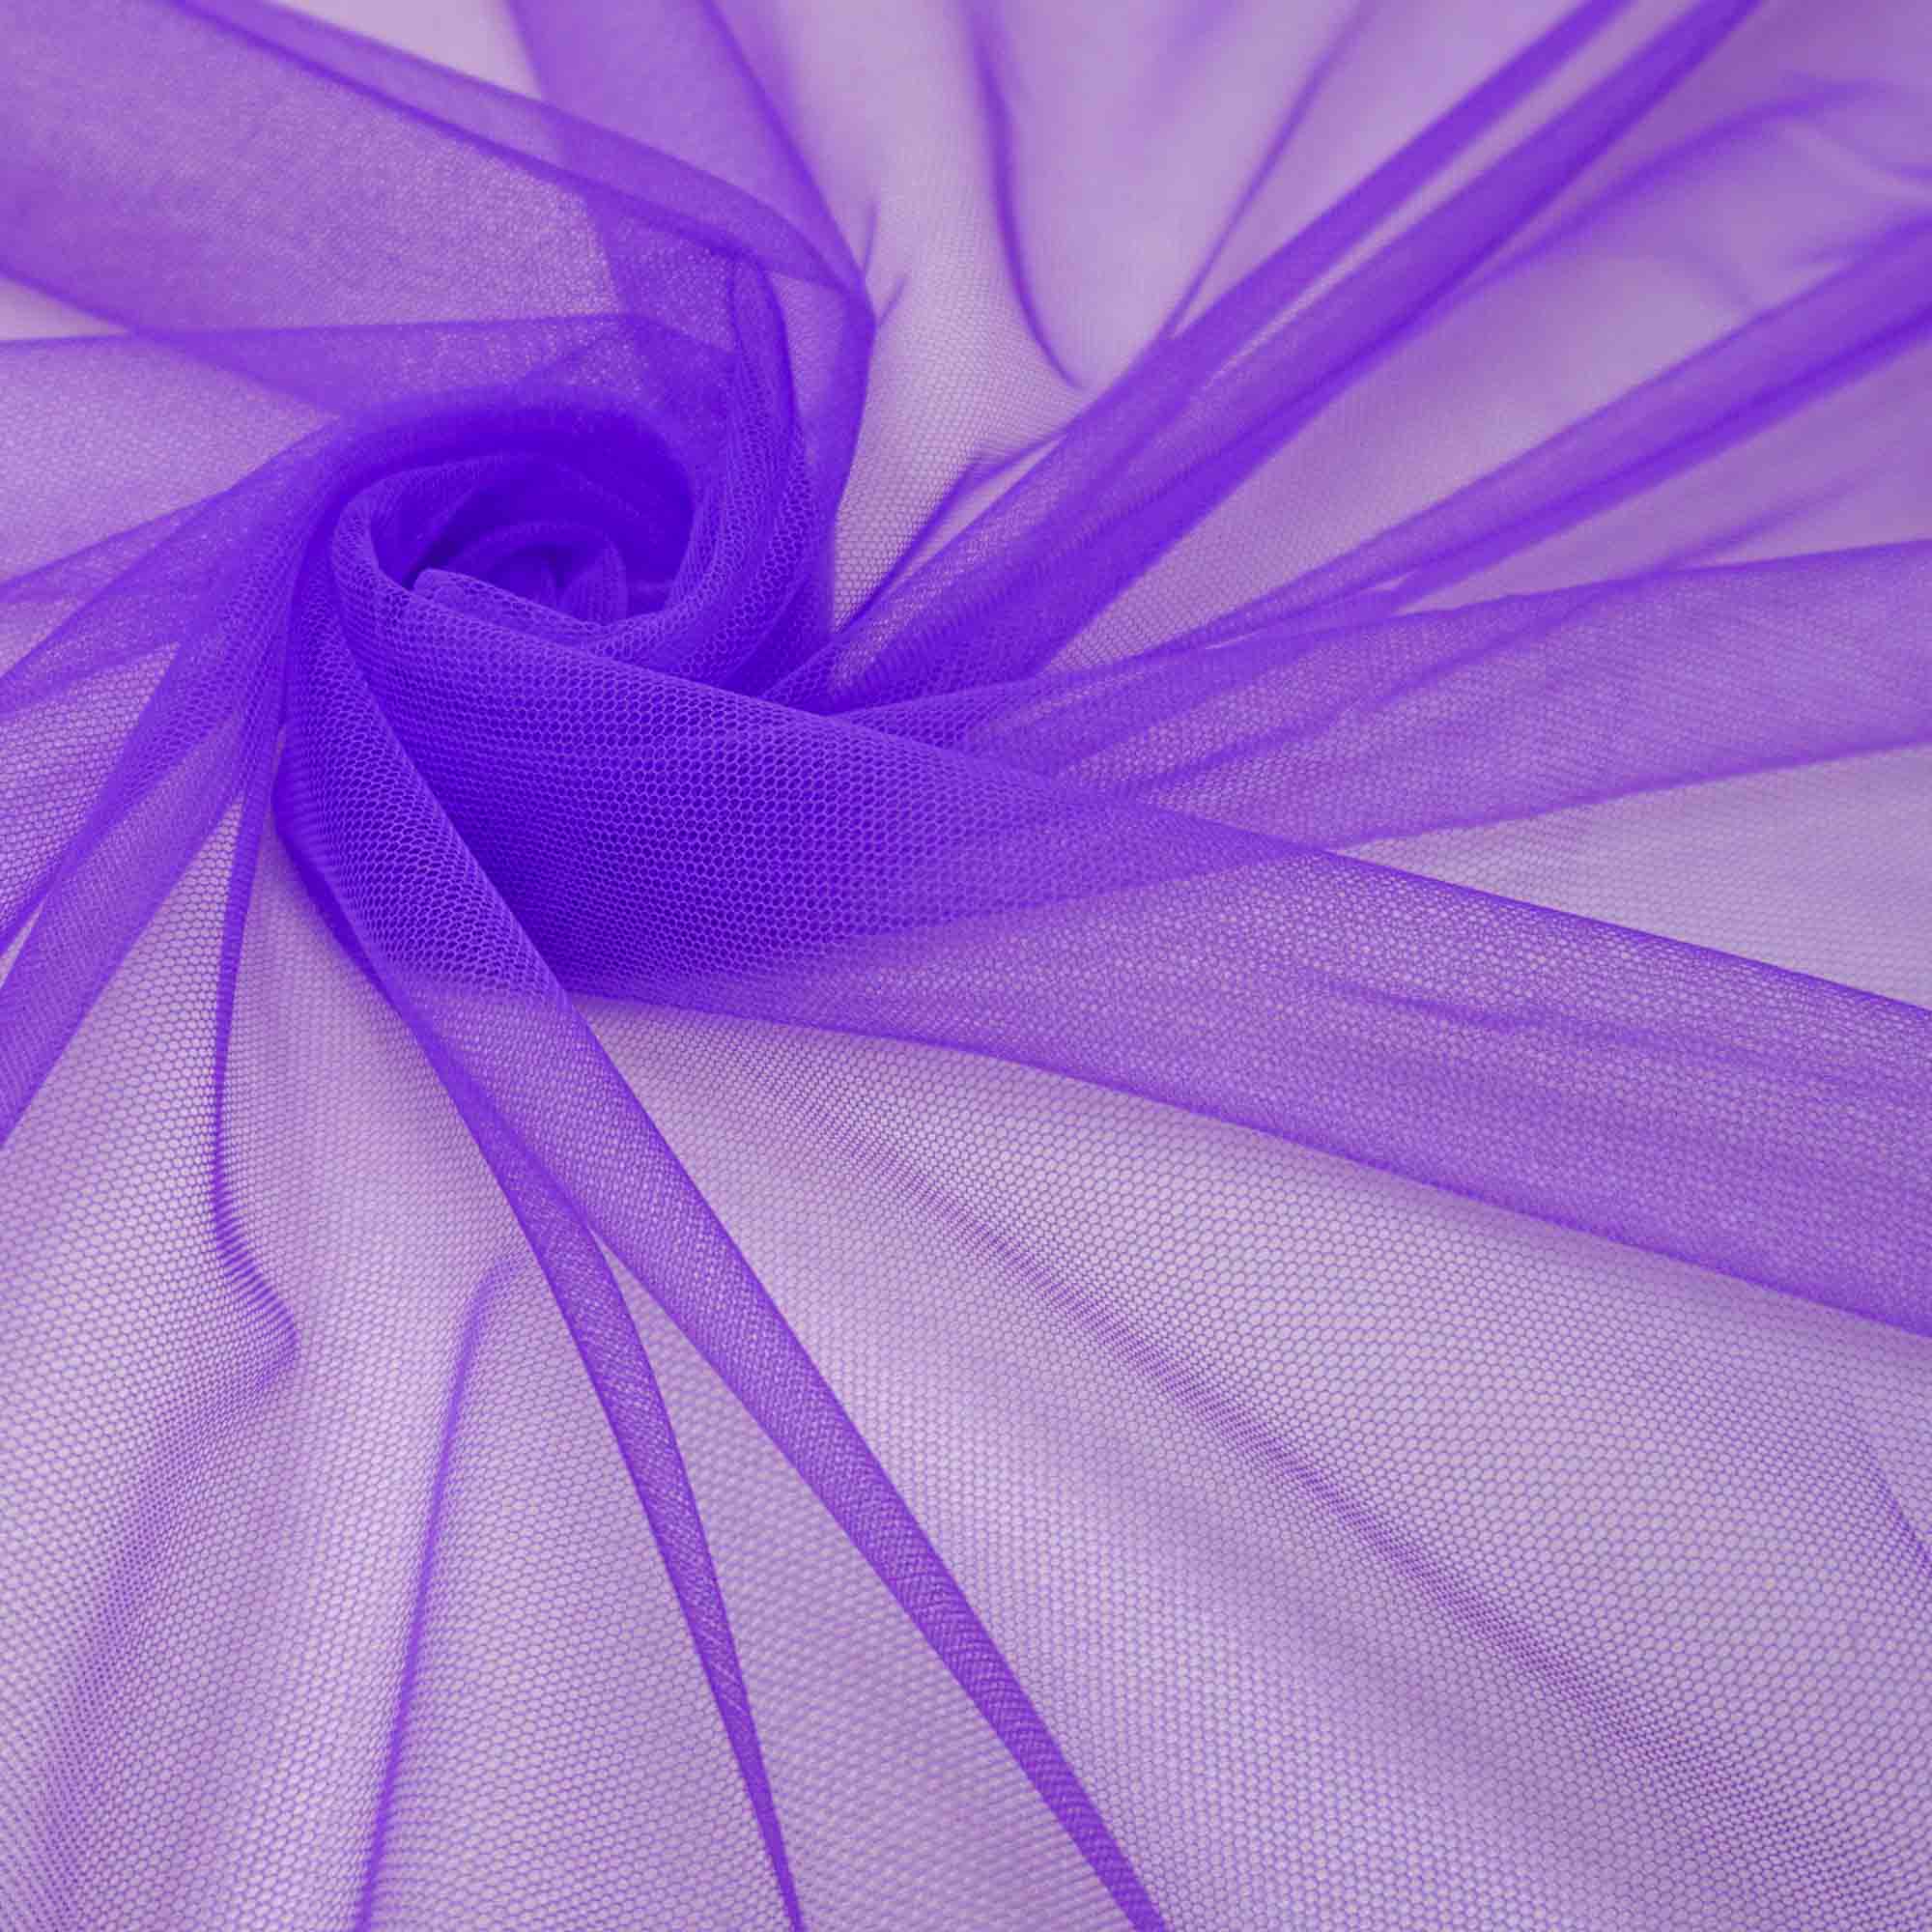 Tecido tule ilusione (ilusion) lilás